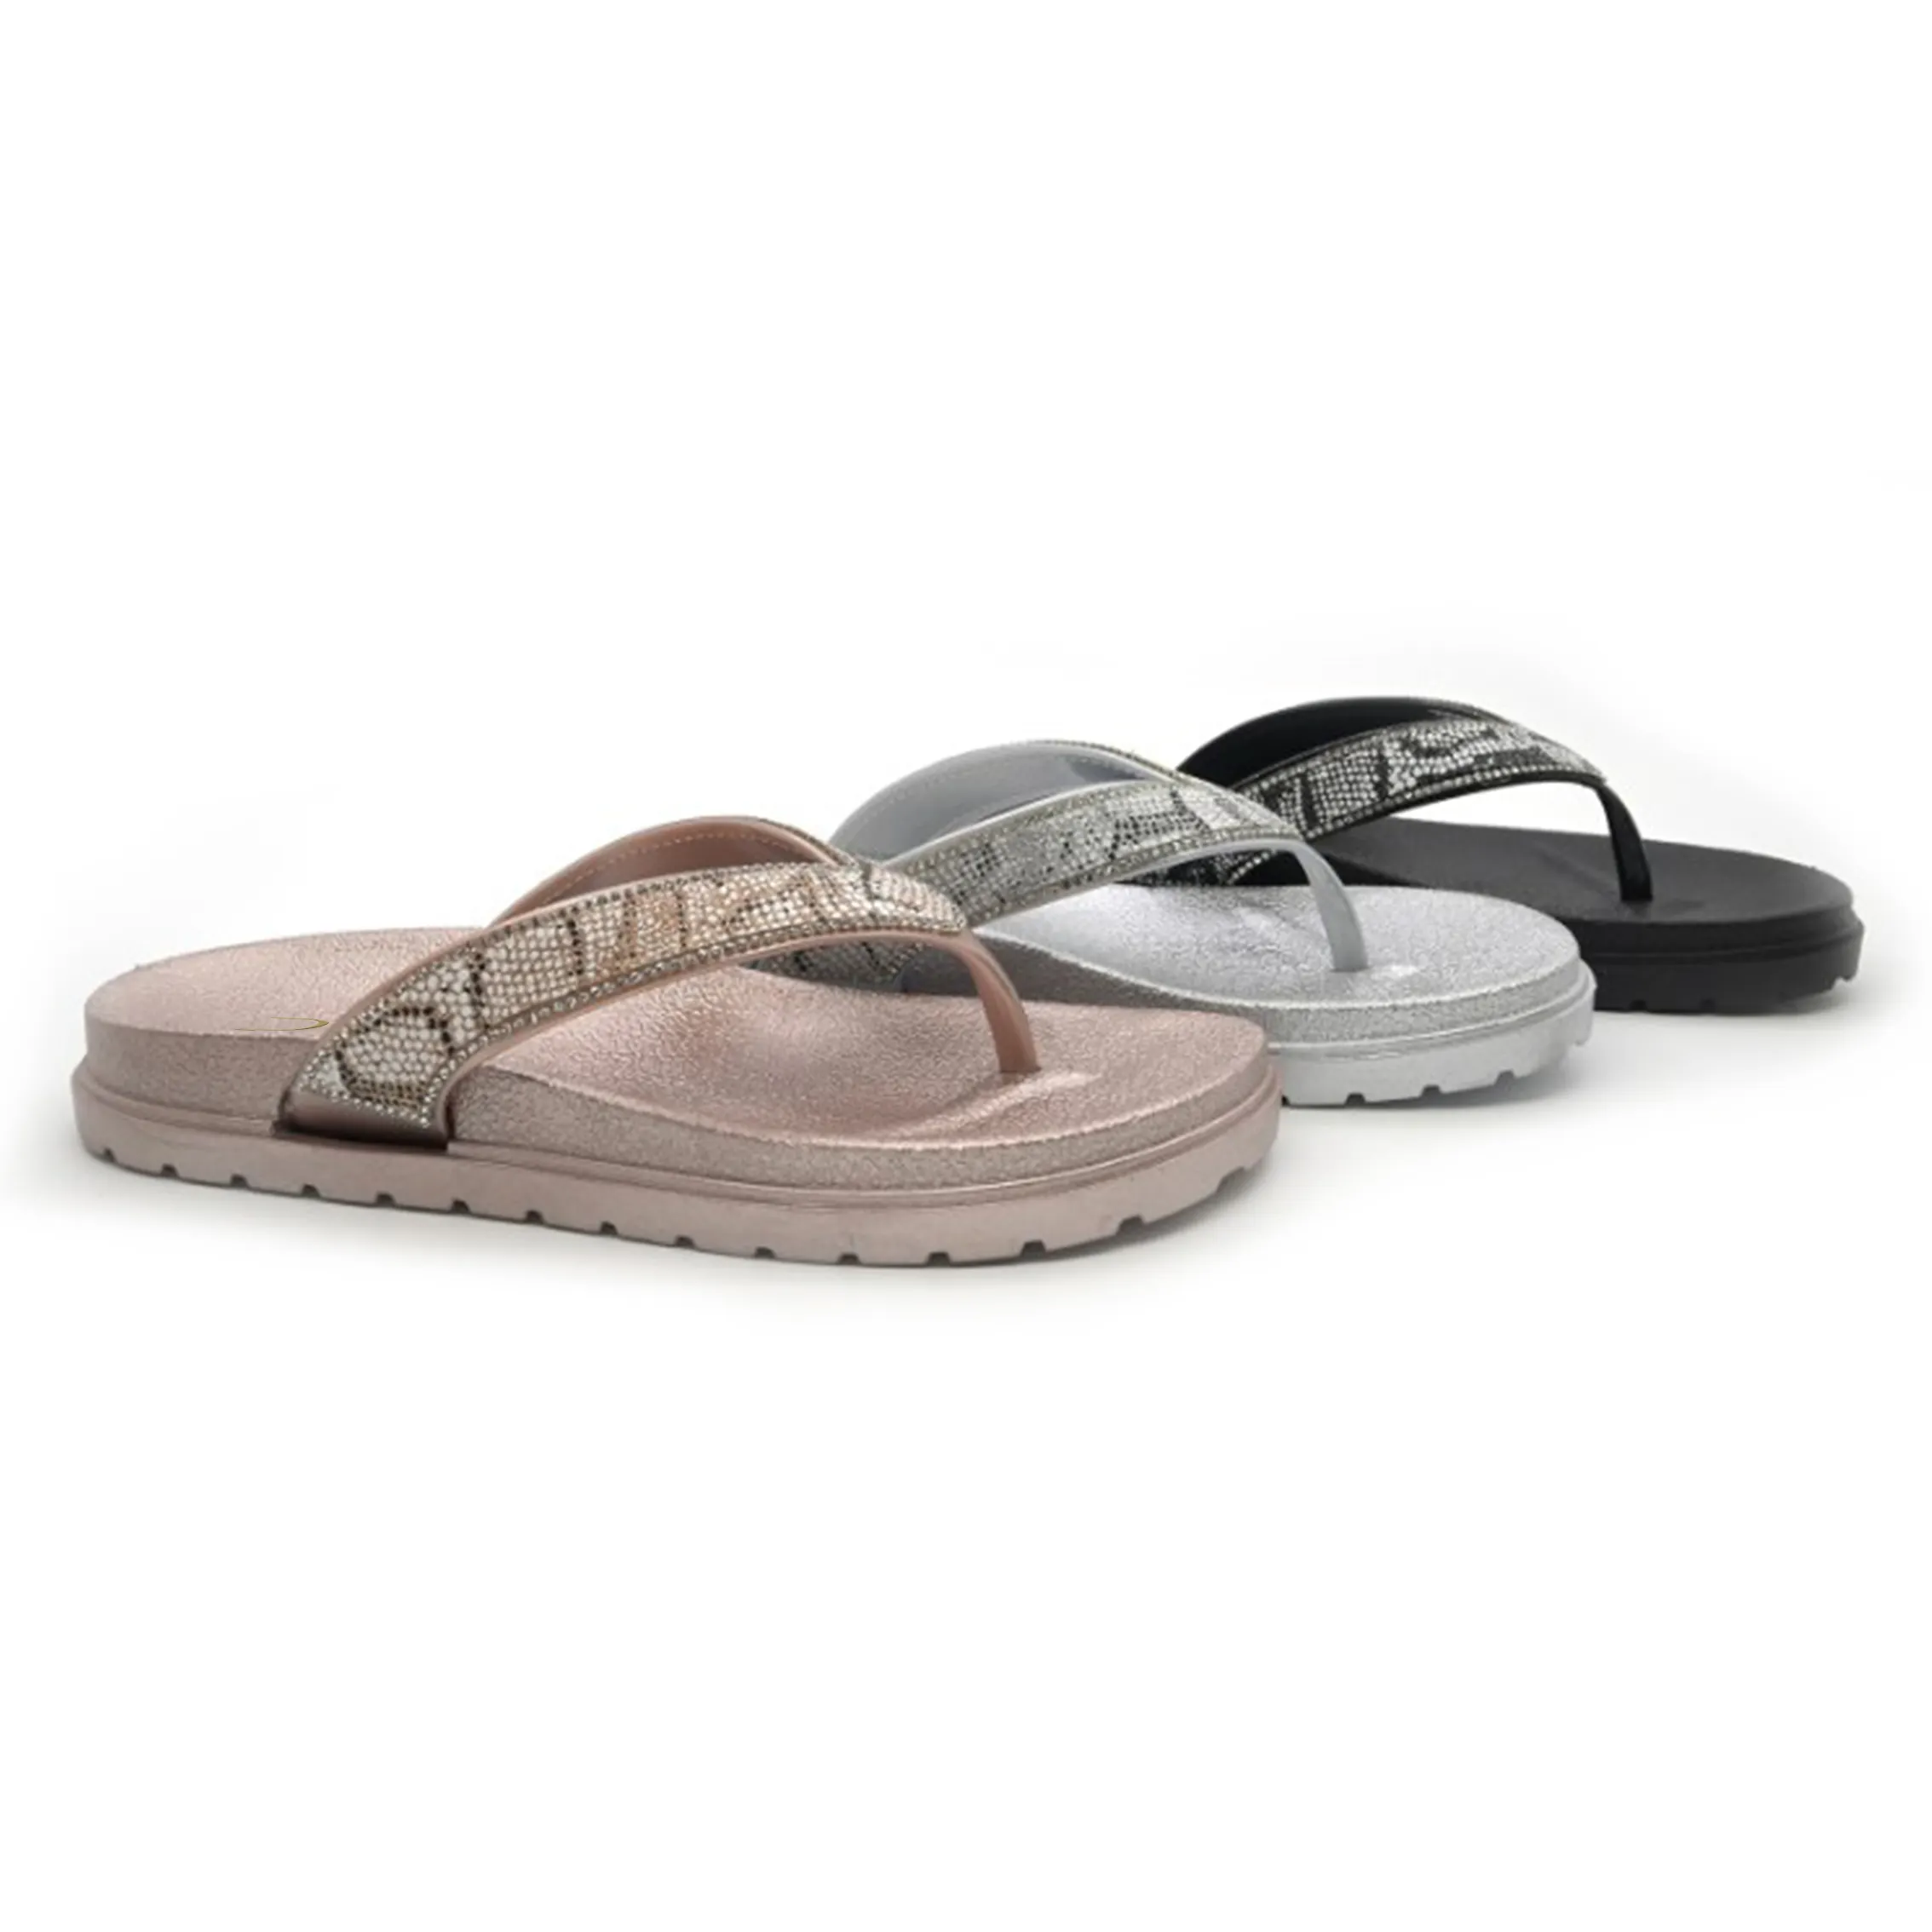 Hot Sale Ladies Flat Sandals Shoes Outdoor Beach PVC Slippers New Fashion Diamond Design Flip Flops For Women